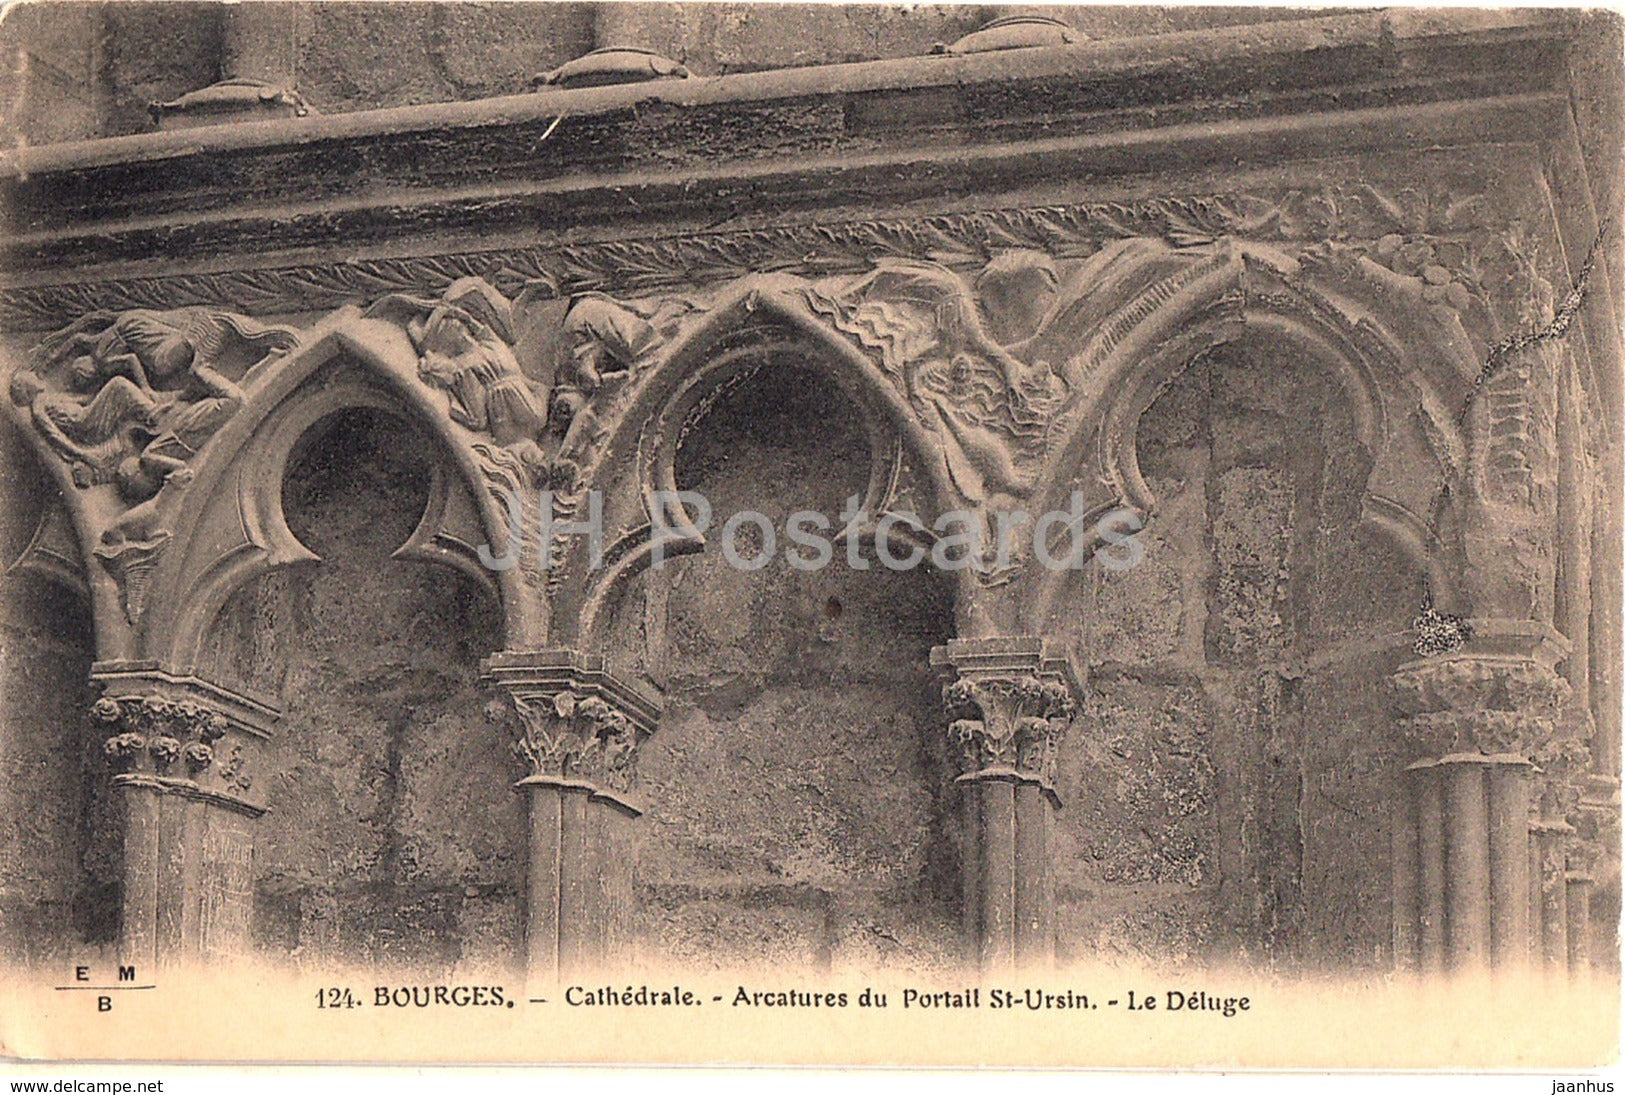 Bourges - Cathedrale - Arcatures du Portail St Ursin - Le Deluge - cathedral - 124 - old postcard - France - unused